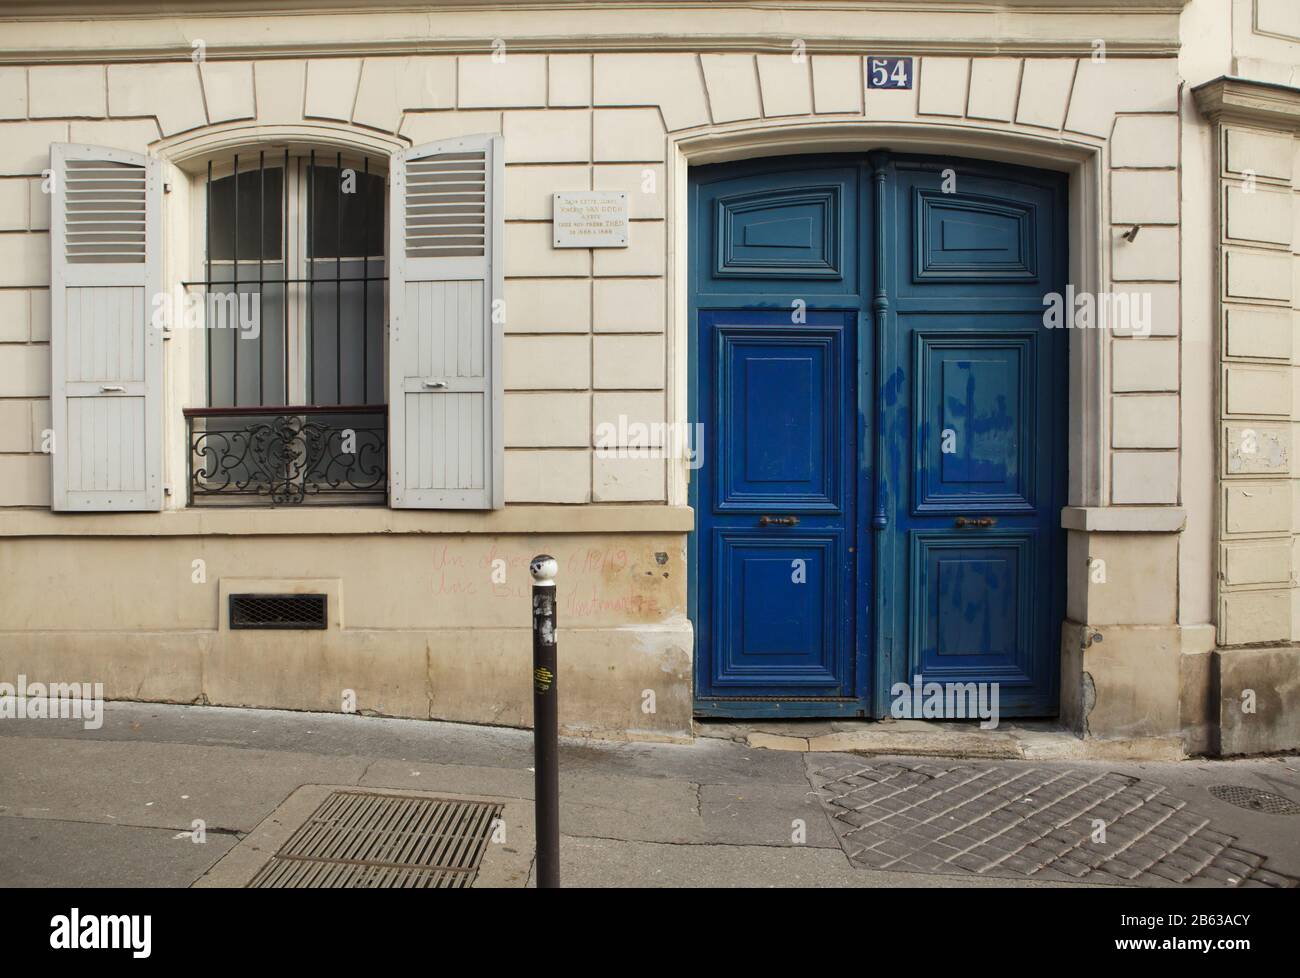 Casa dove Vincent van Gogh visse insieme al fratello Théo van Gogh in Rue Lepic a Montmartre a Parigi, Francia. Testo sulla tavoletta commemorativa significa: In questa casa Vincent van Gogh visse con suo fratello Théo dal 1886 al 1888. Vincent van Gogh visse qui dal giugno 1886 al febbraio 1888. Foto Stock